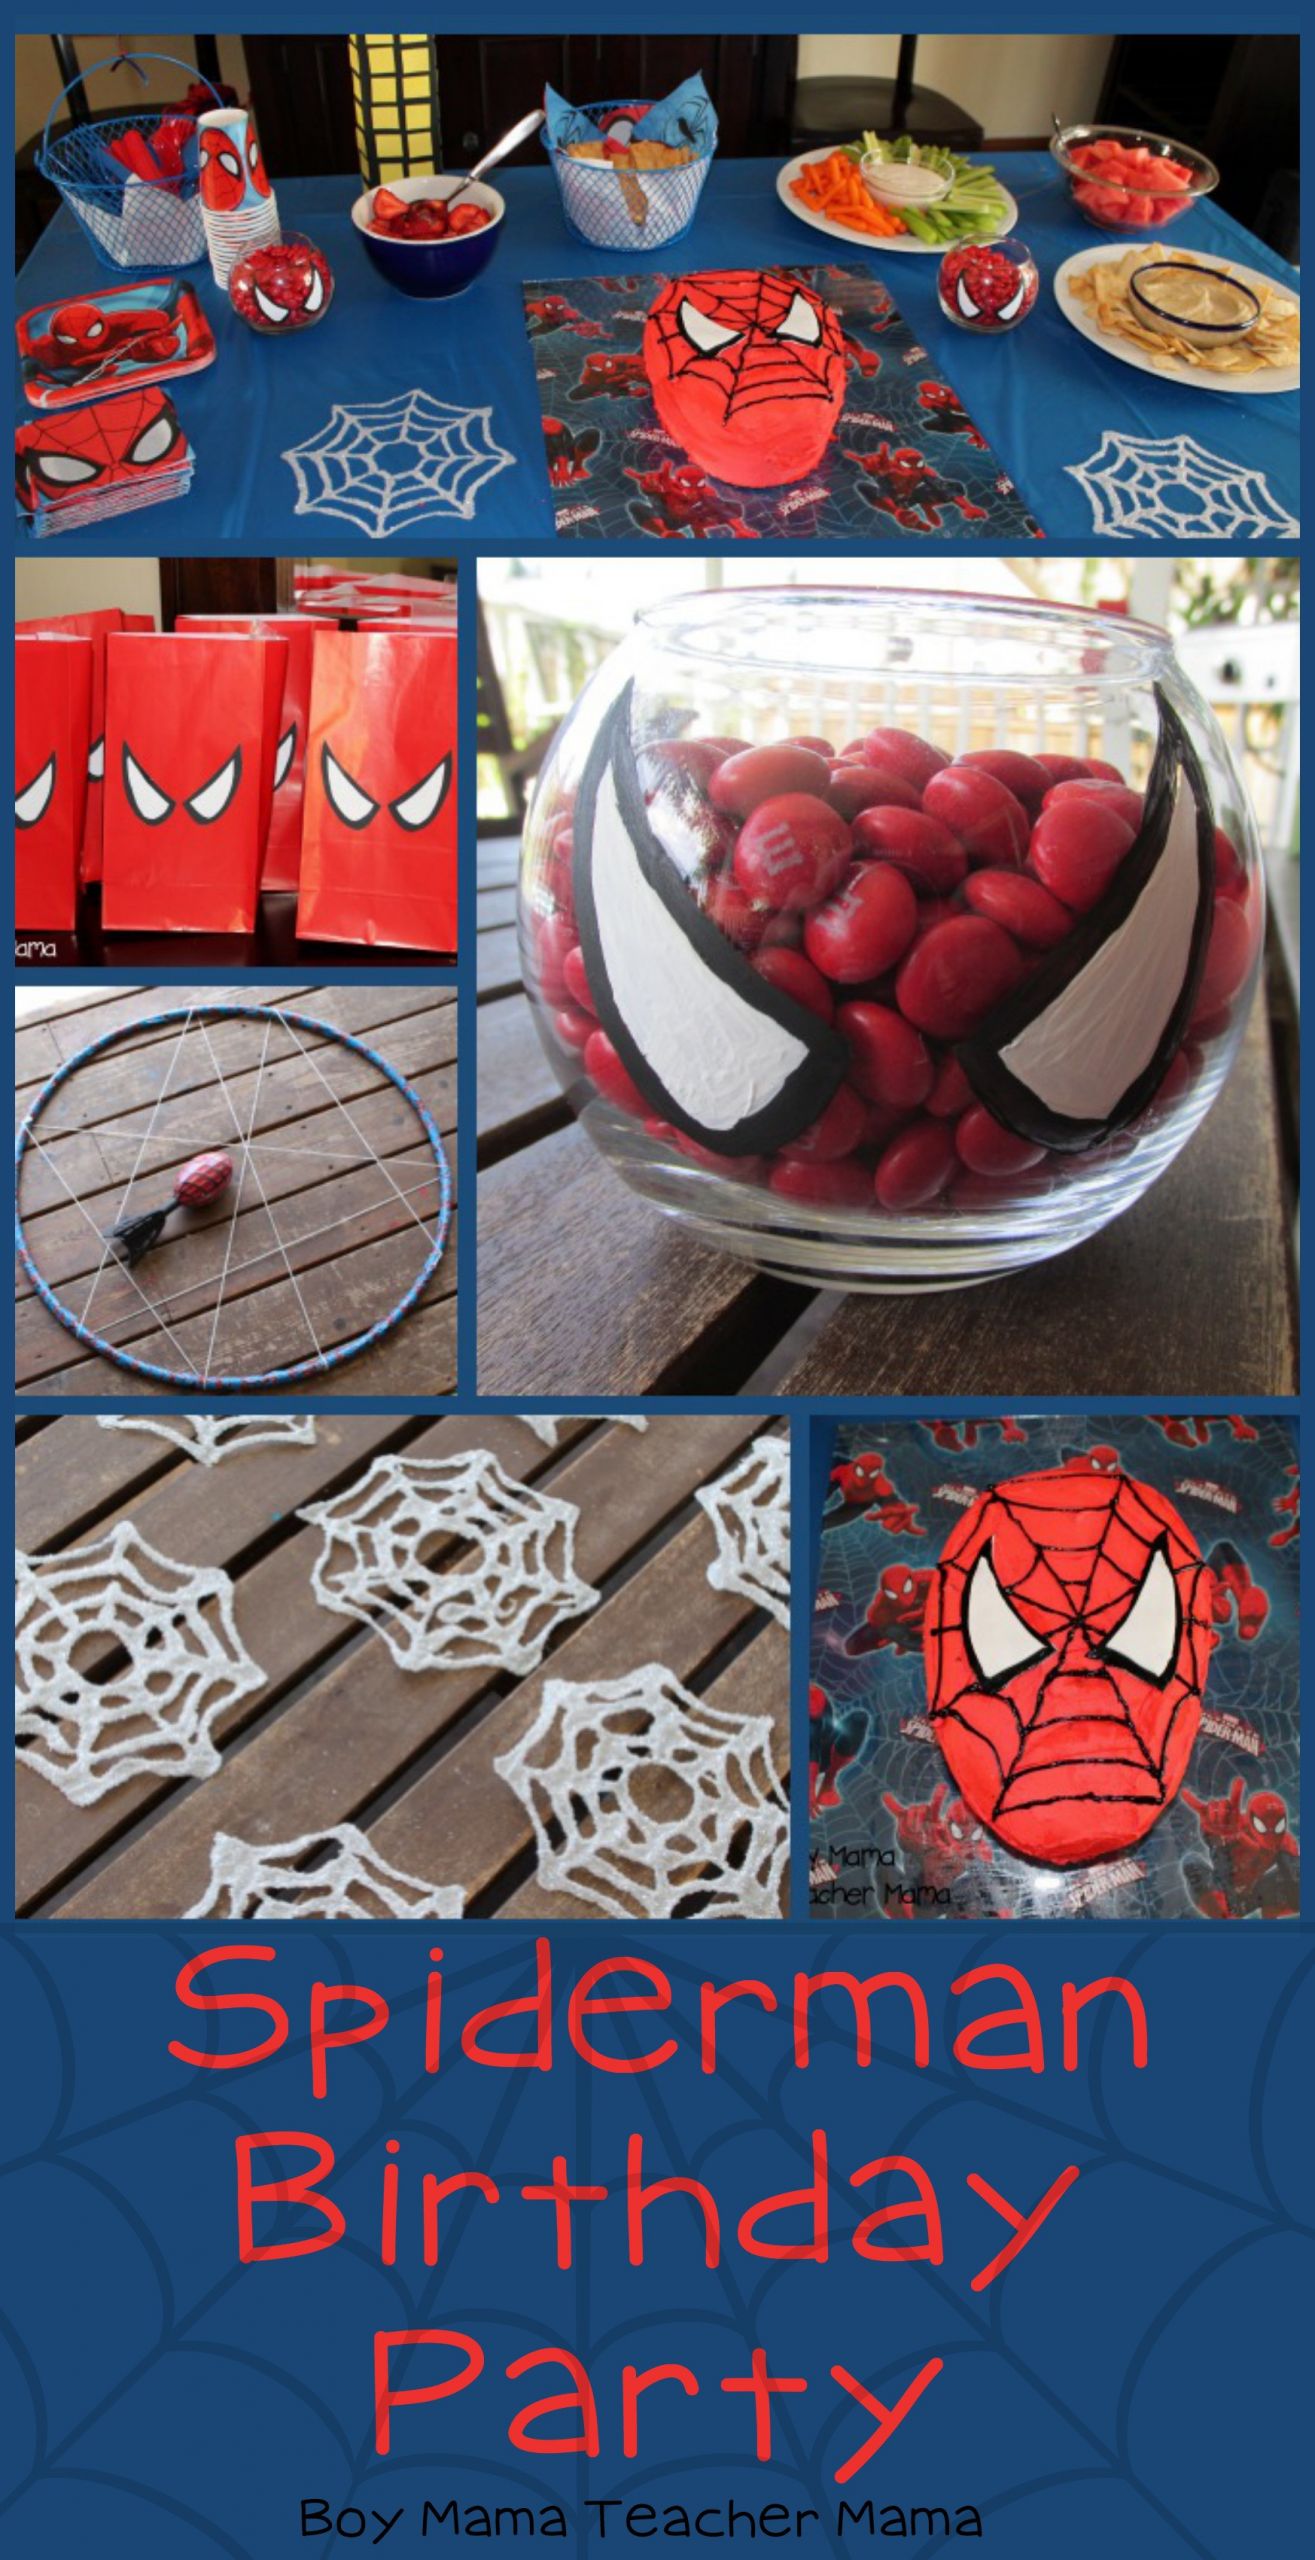 Spiderman Birthday Decorations
 Boy Mama Spiderman Birthday Party Boy Mama Teacher Mama